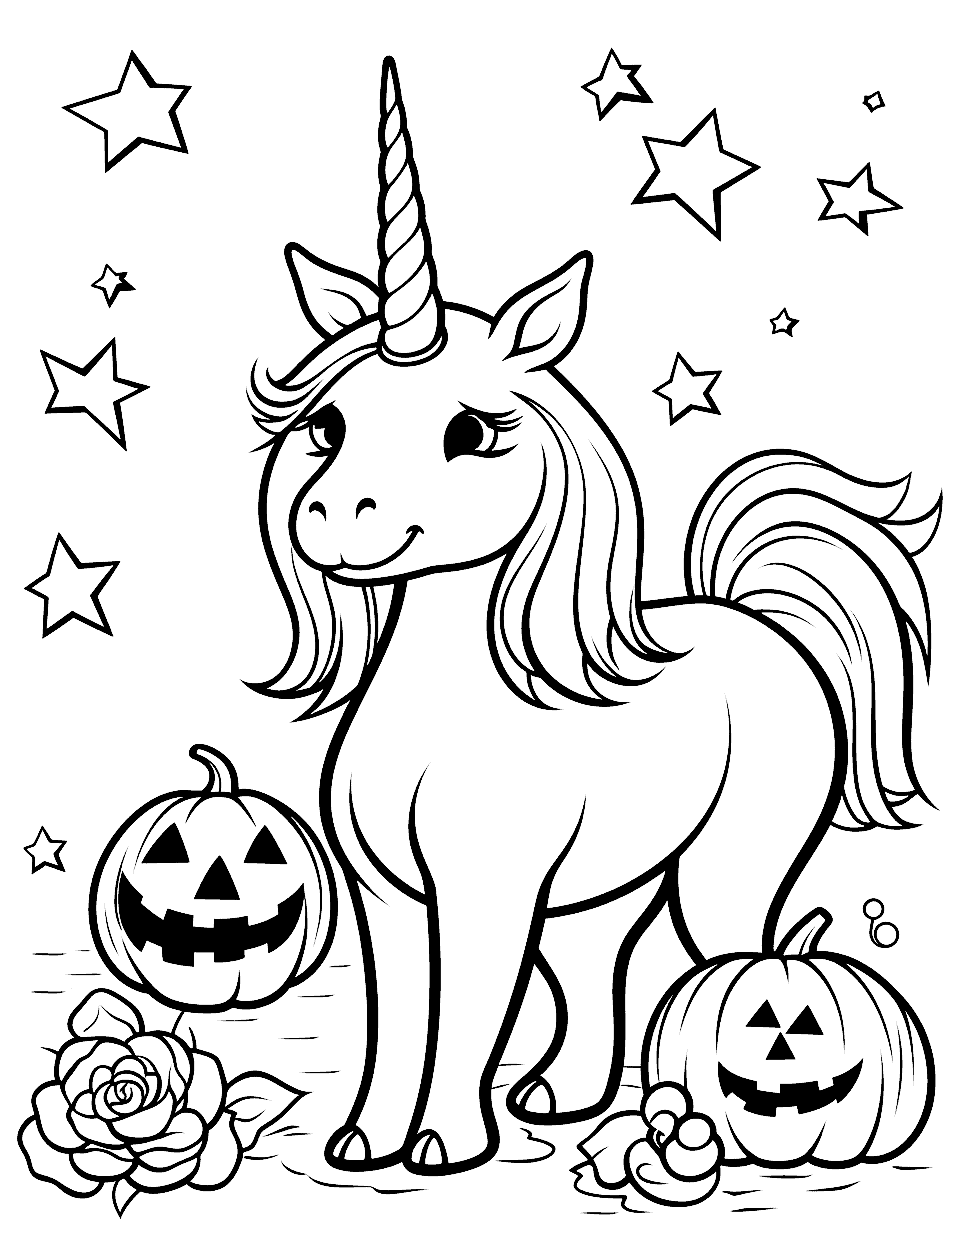 Unicorn Jack-o'-Lantern Coloring Page - A unicorn with jack-o’-lanterns and lots of stars.